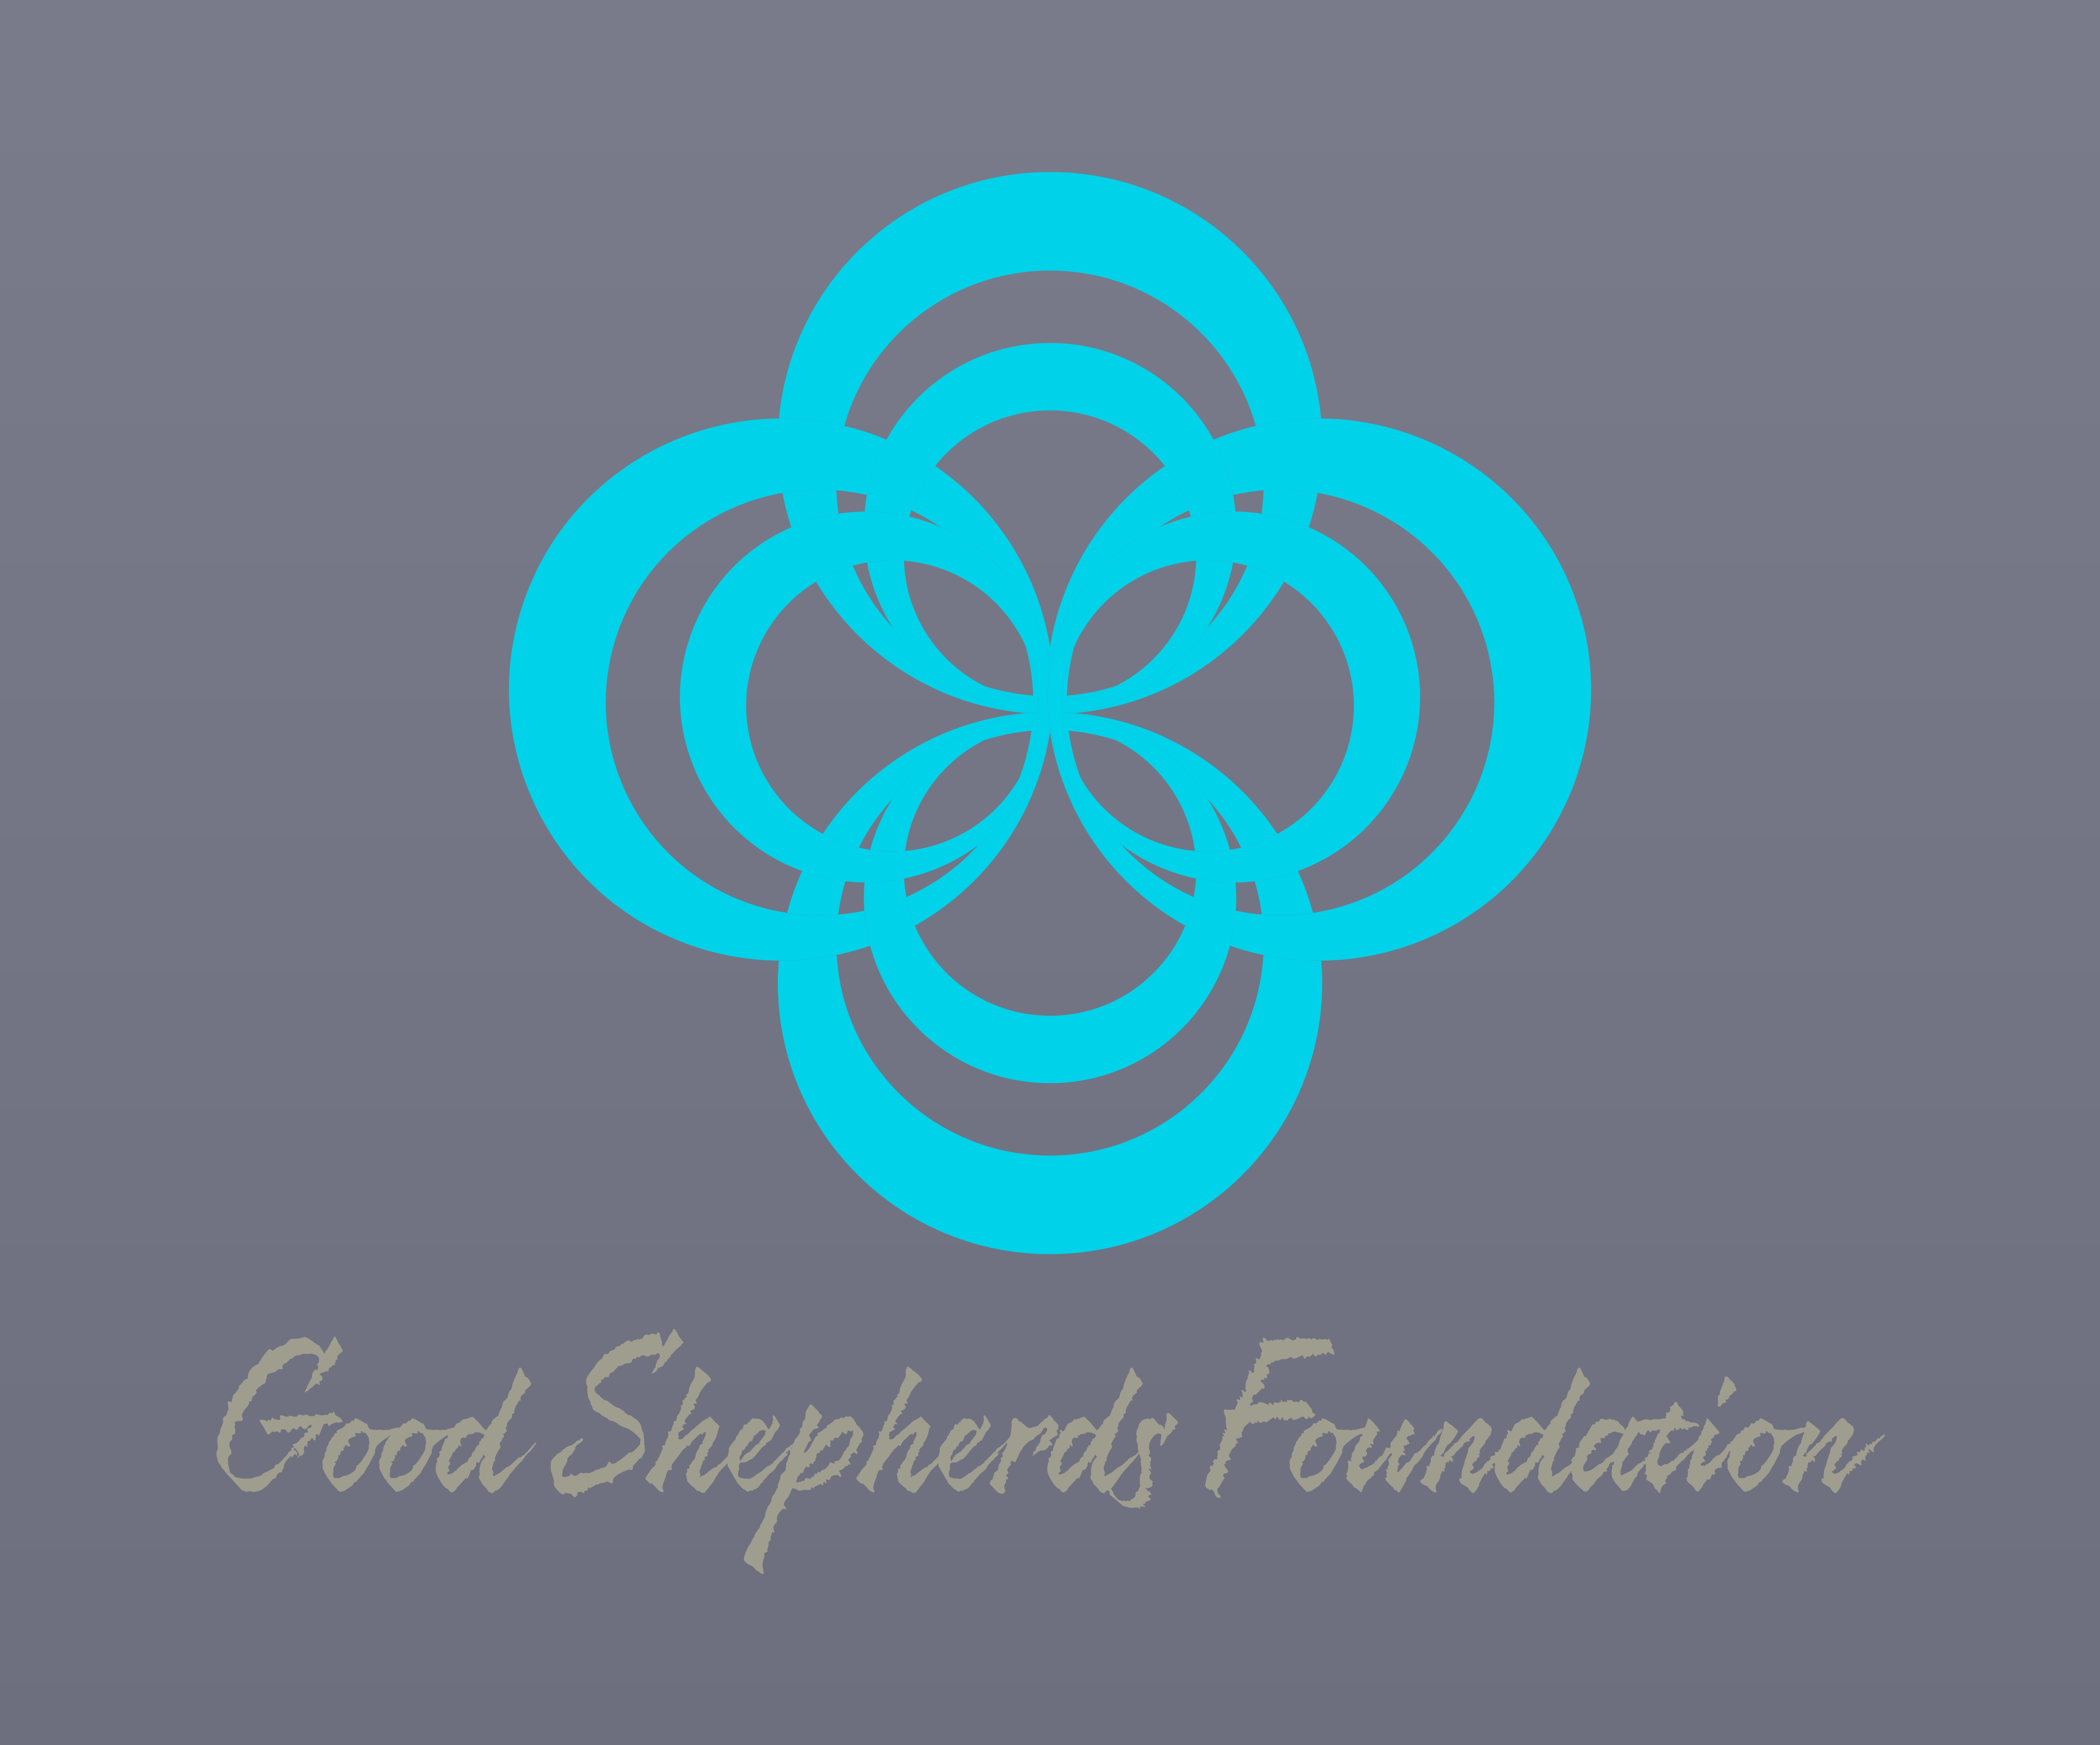 Good Shepherds Foundation logo